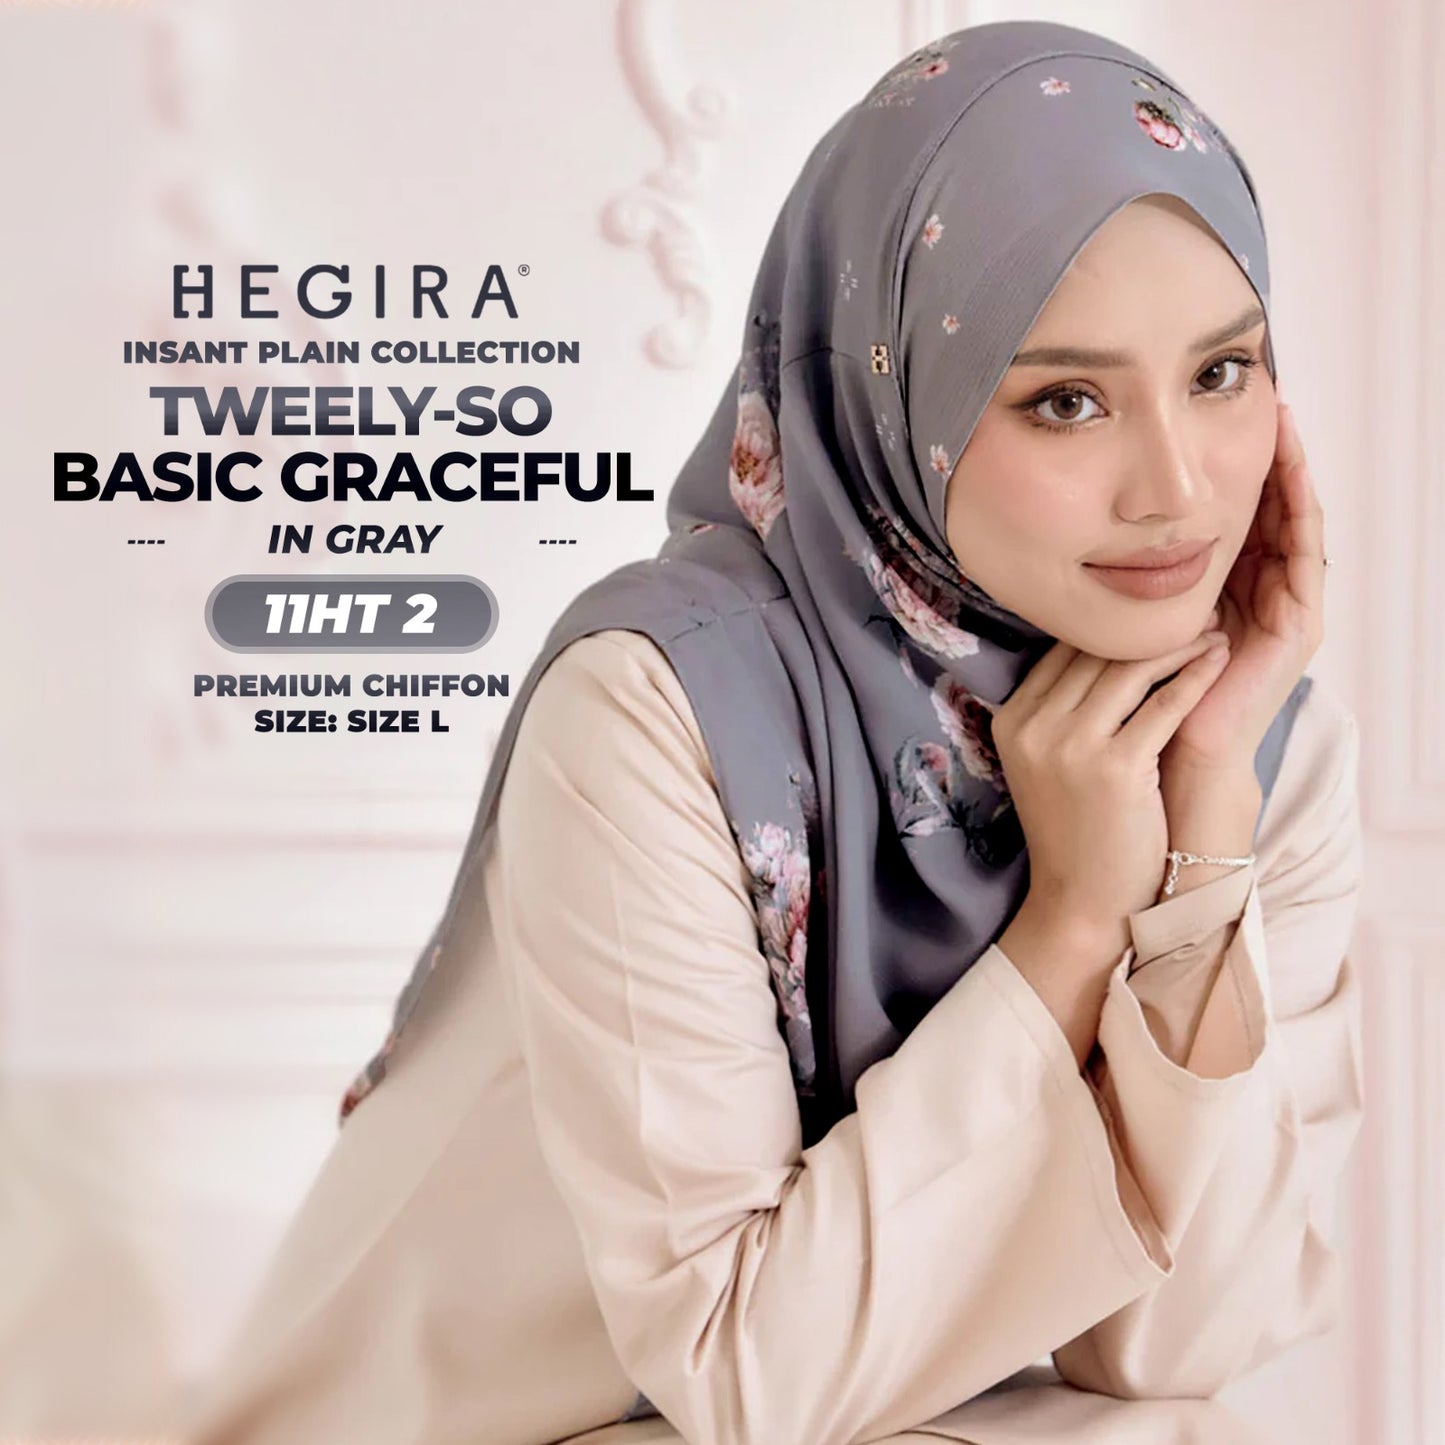 Hegira Inspired TWEELY-SO BASIC GRACEFUL Instant Collection (11HT)